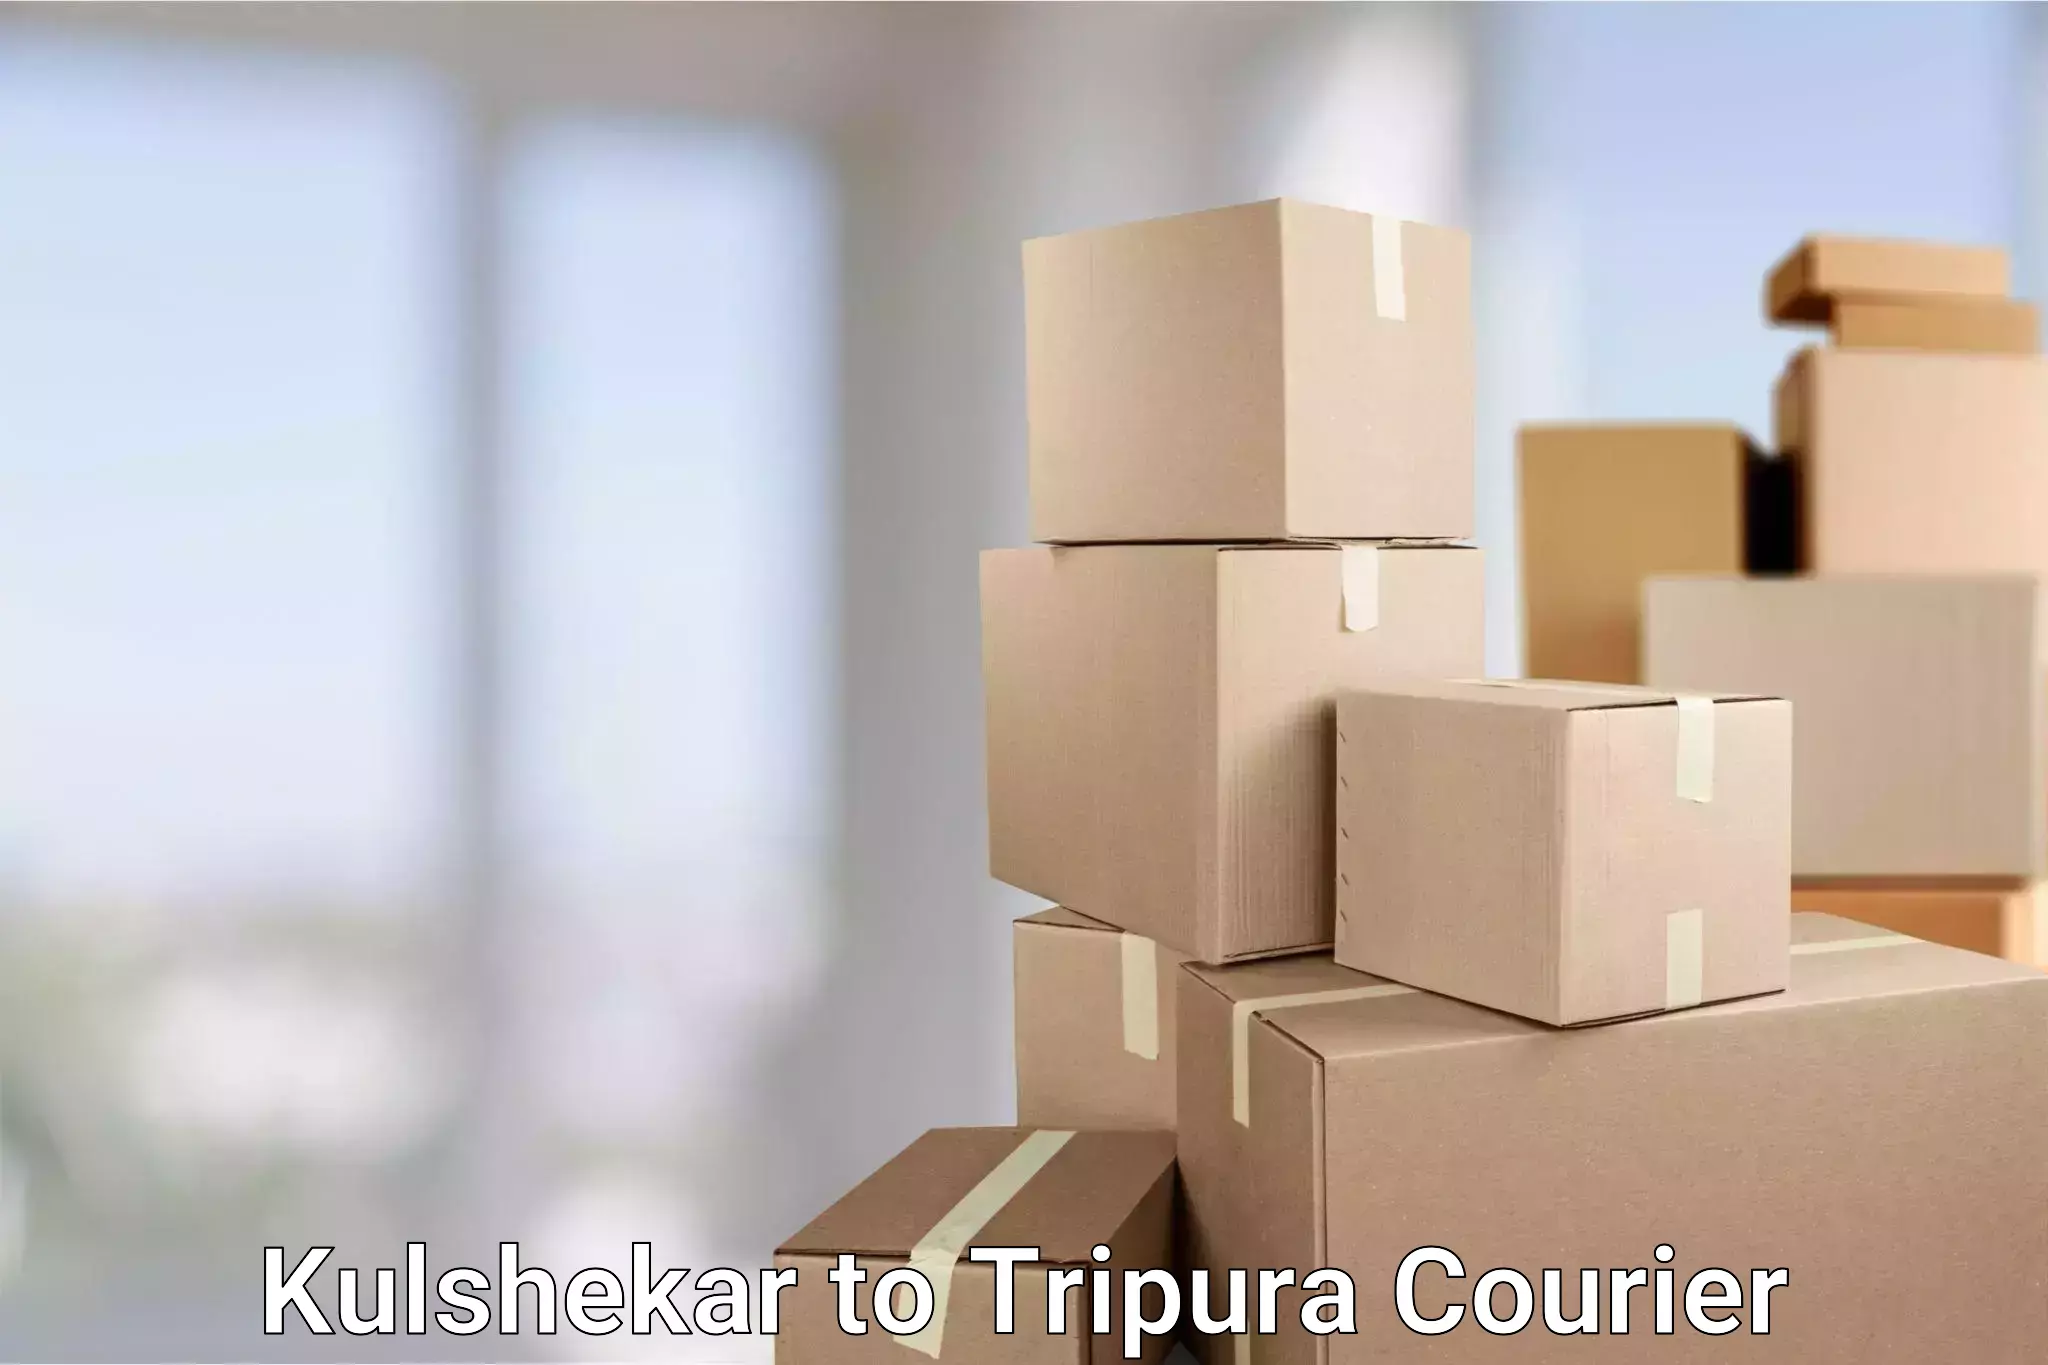 Courier service innovation Kulshekar to Tripura